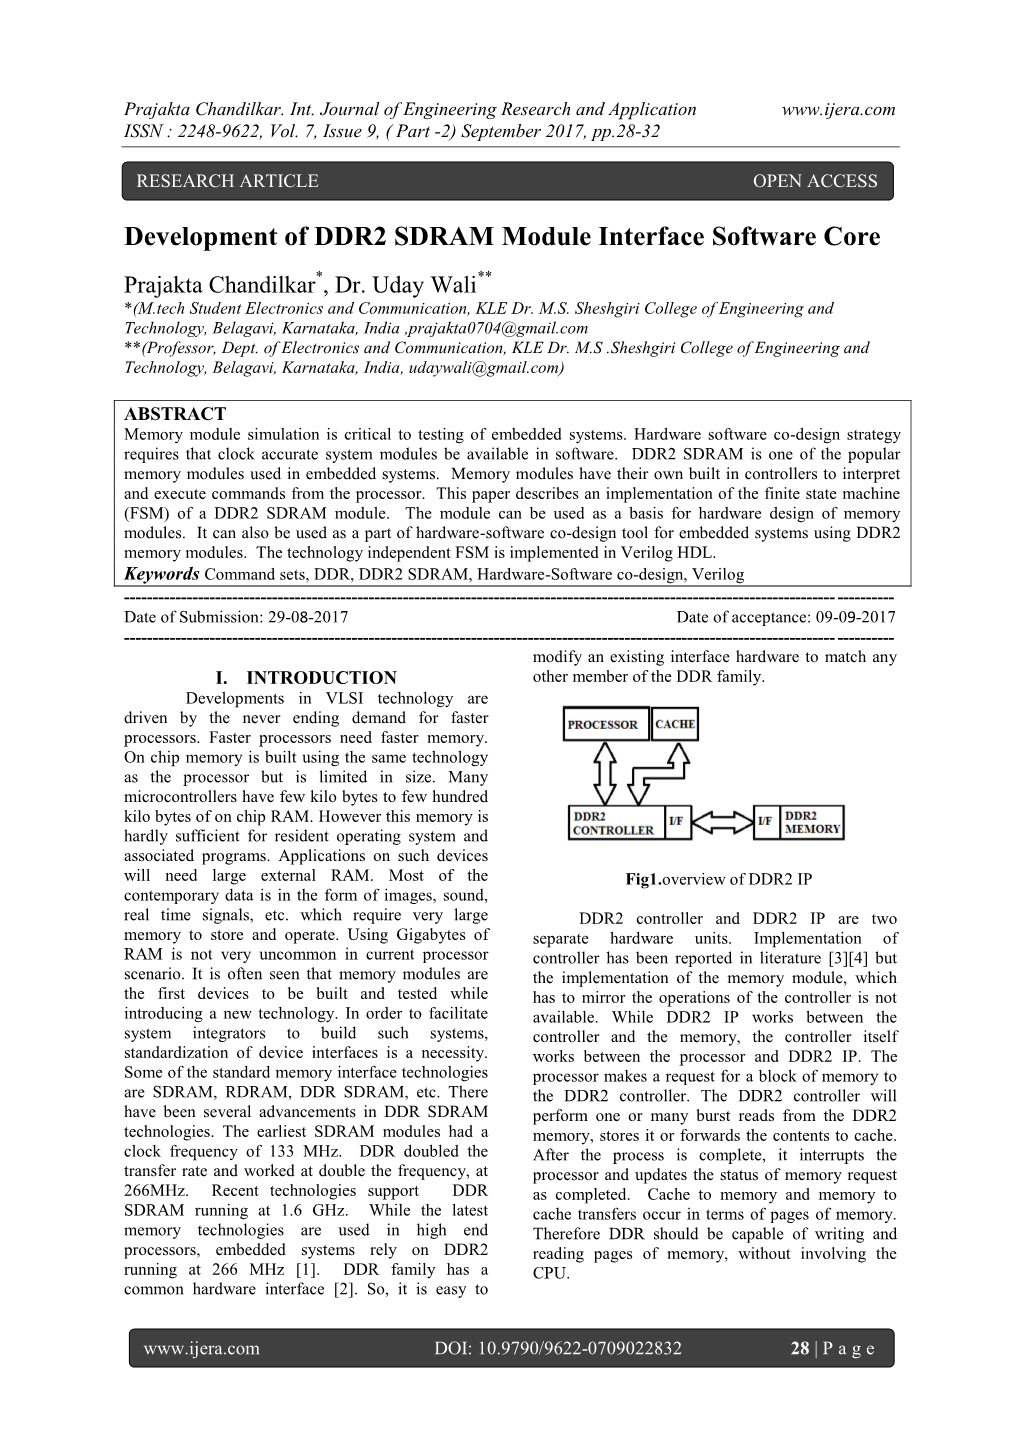 Development of DDR2 SDRAM Module Interface Software Core